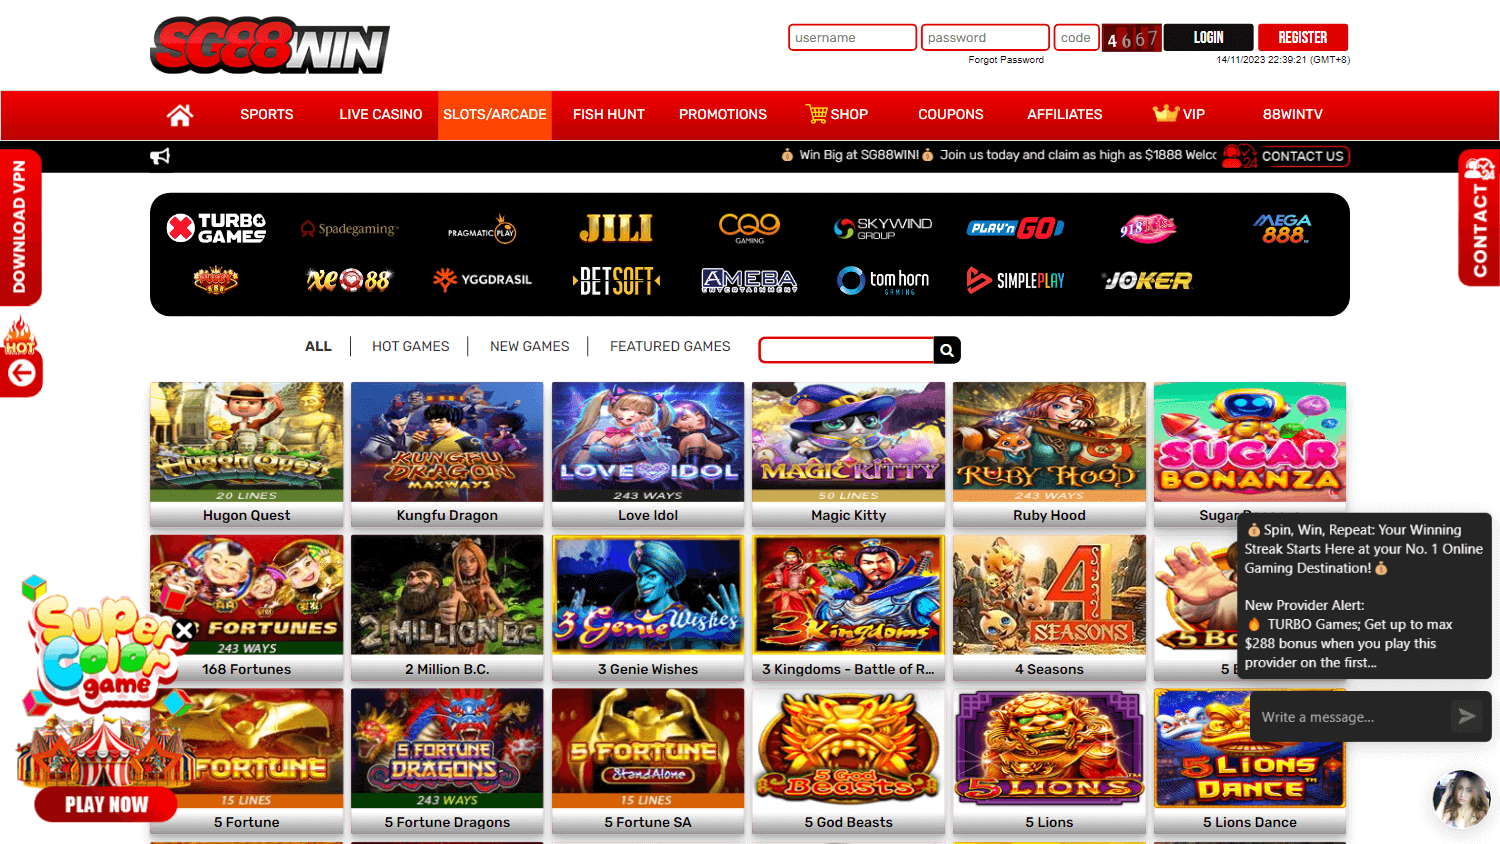 sg88win_casino_game_gallery_desktop